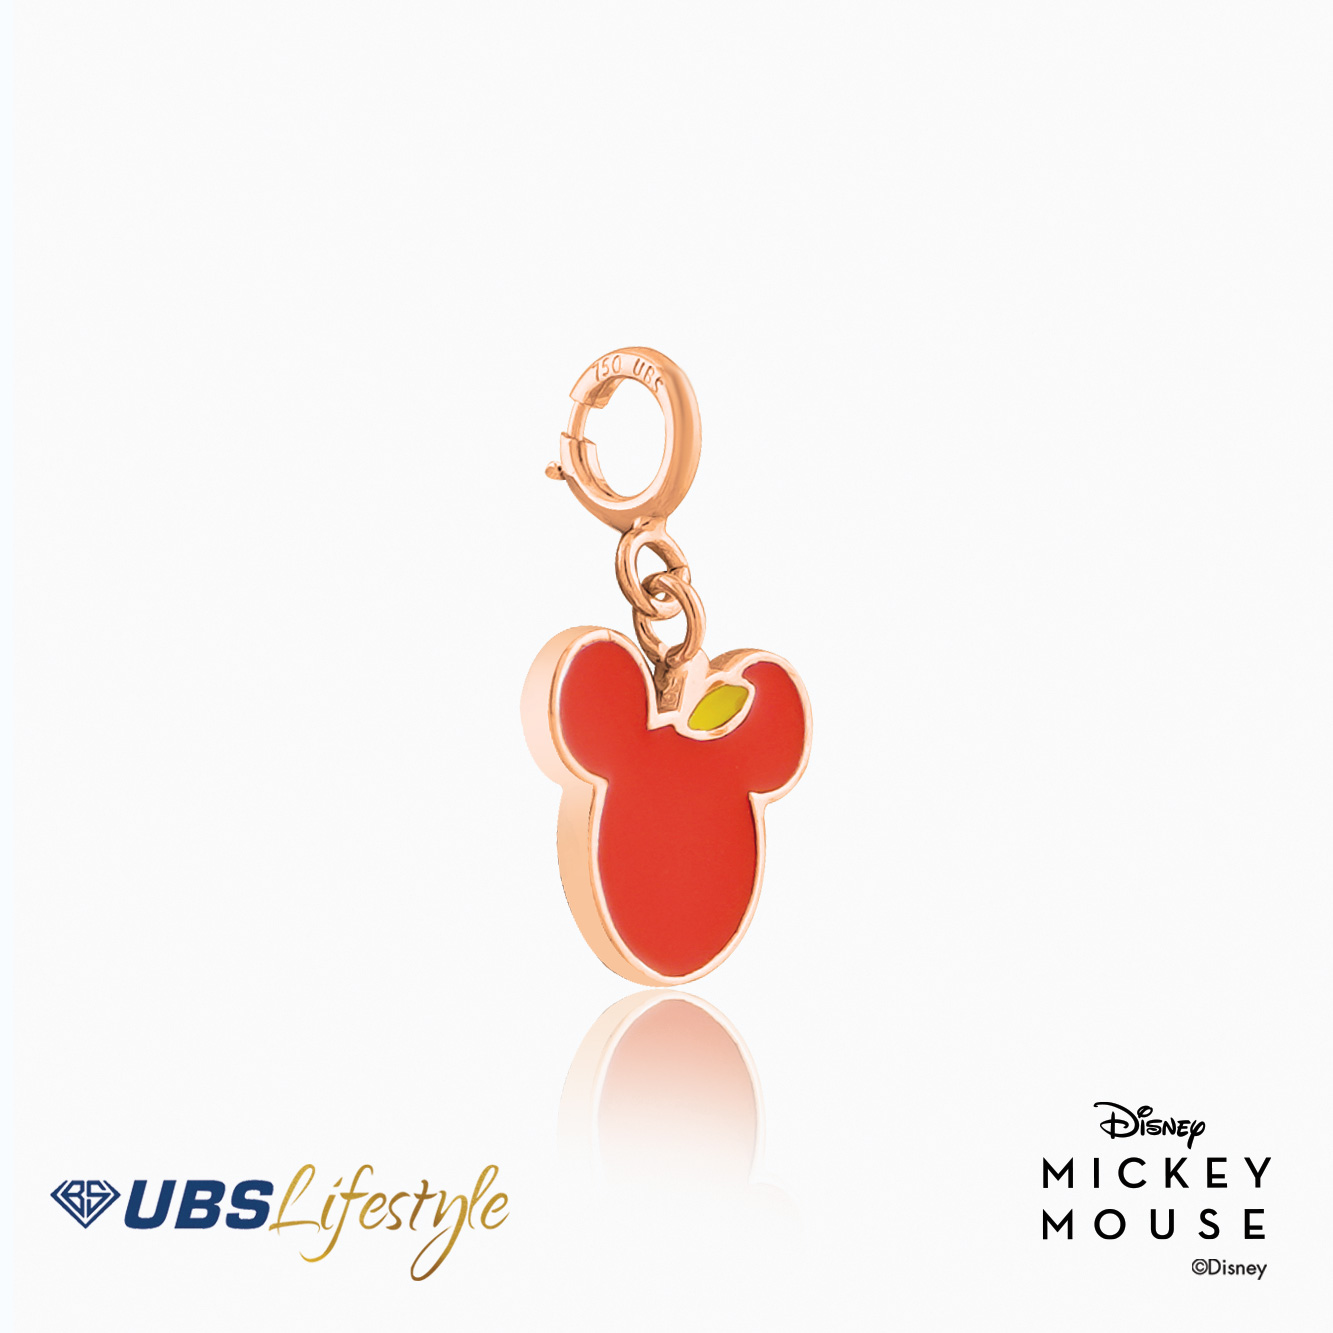 UBS Liontin Emas Disney Mickey Mouse - Cmy0081 - 17K